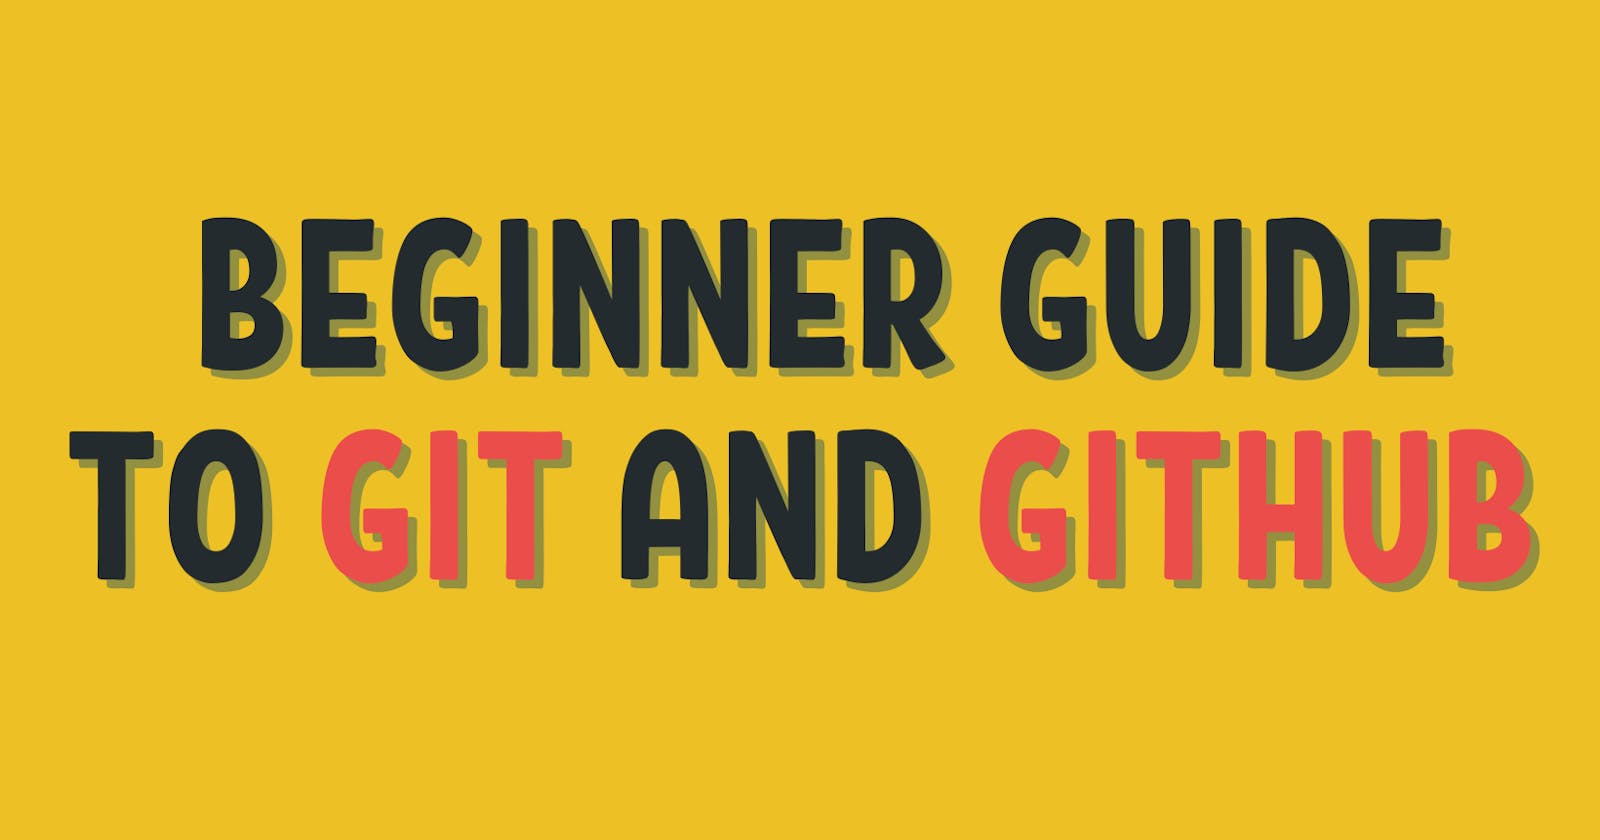 Beginner guide to Git and GitHub